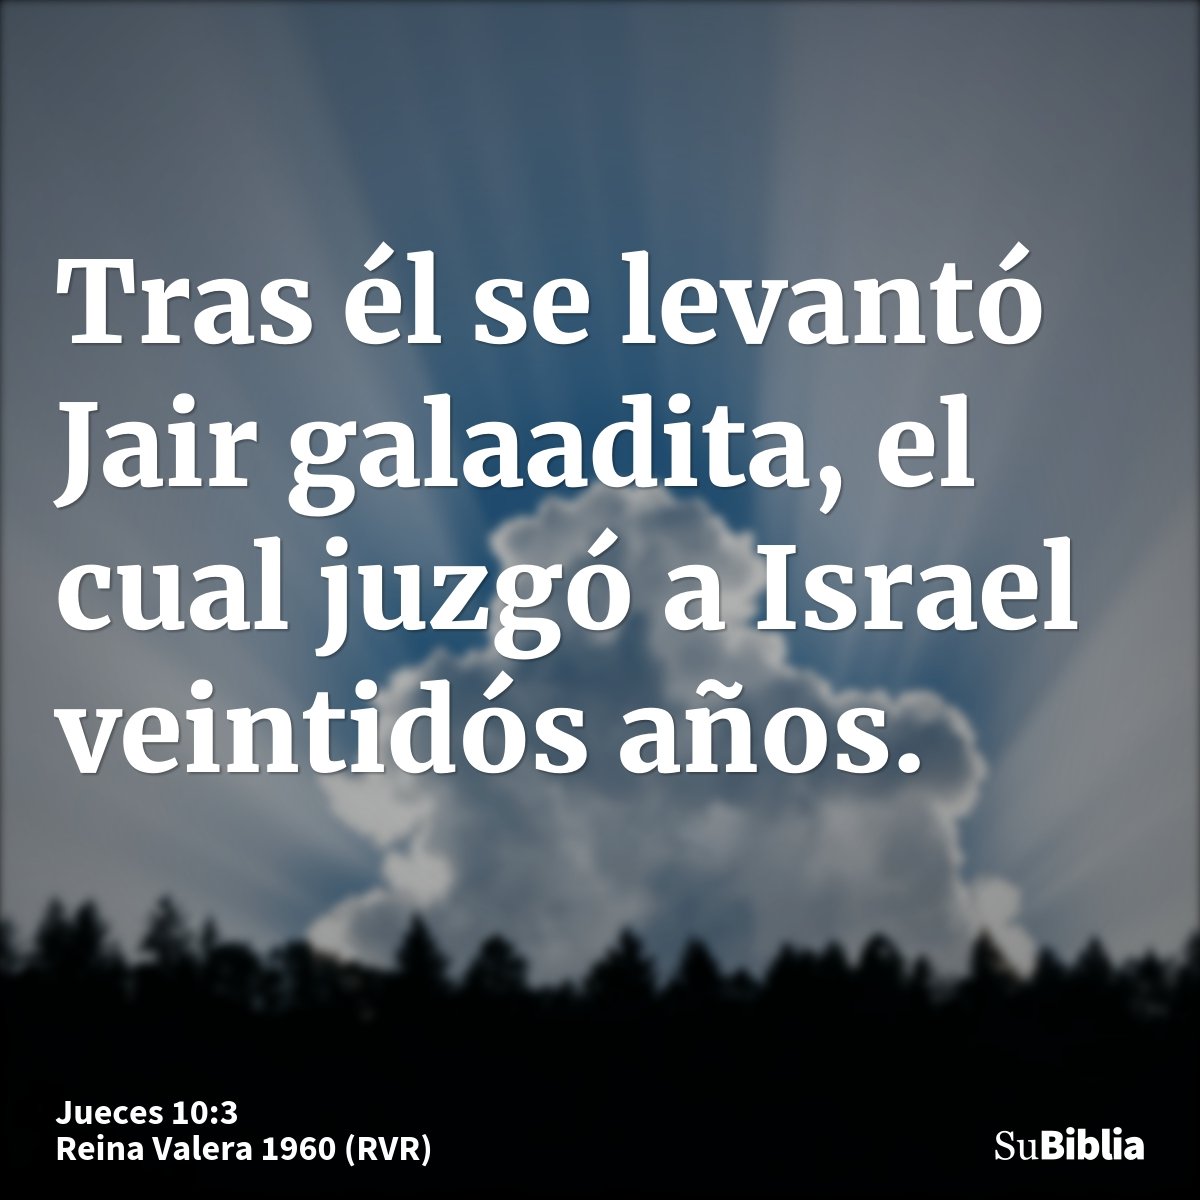 Tras él se levantó Jair galaadita, el cual juzgó a Israel veintidós años.